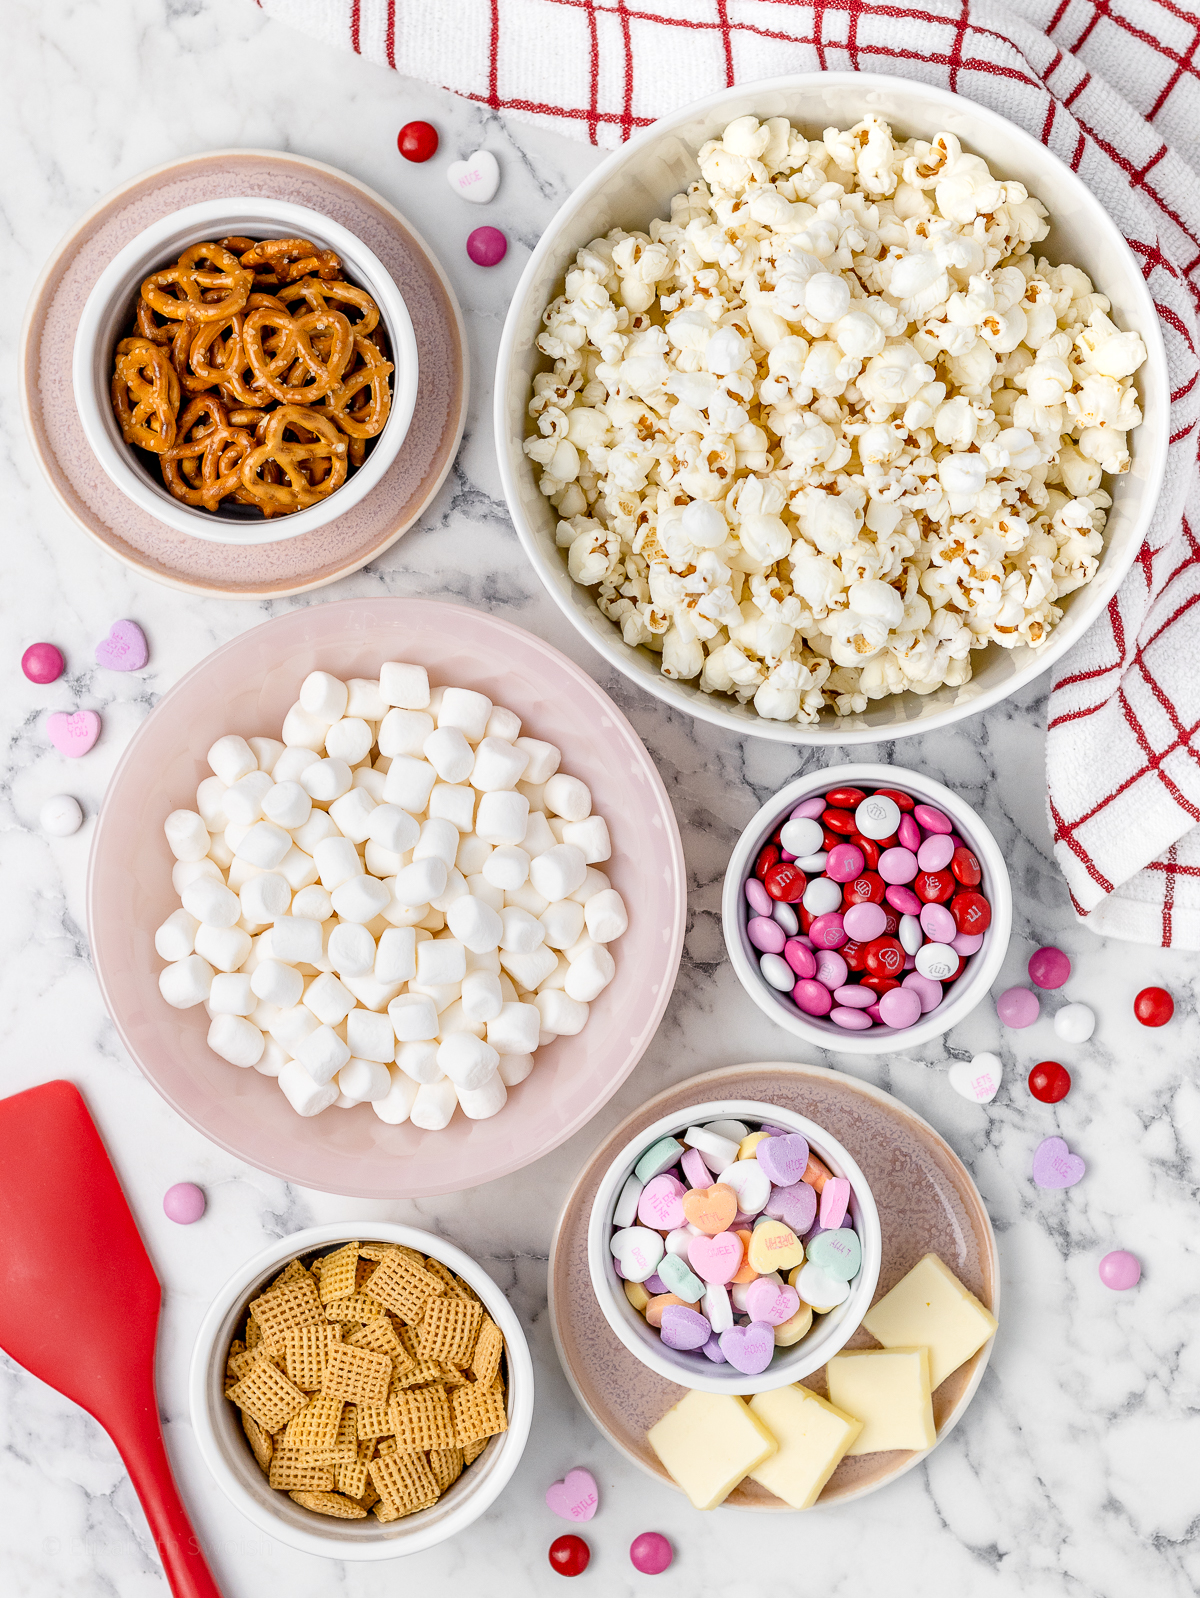 Ingredients. Plain popcorn, corn chex, mini pretzels, mini marshmallows, unsalted butter, mini M&Ms, and conversation hearts.